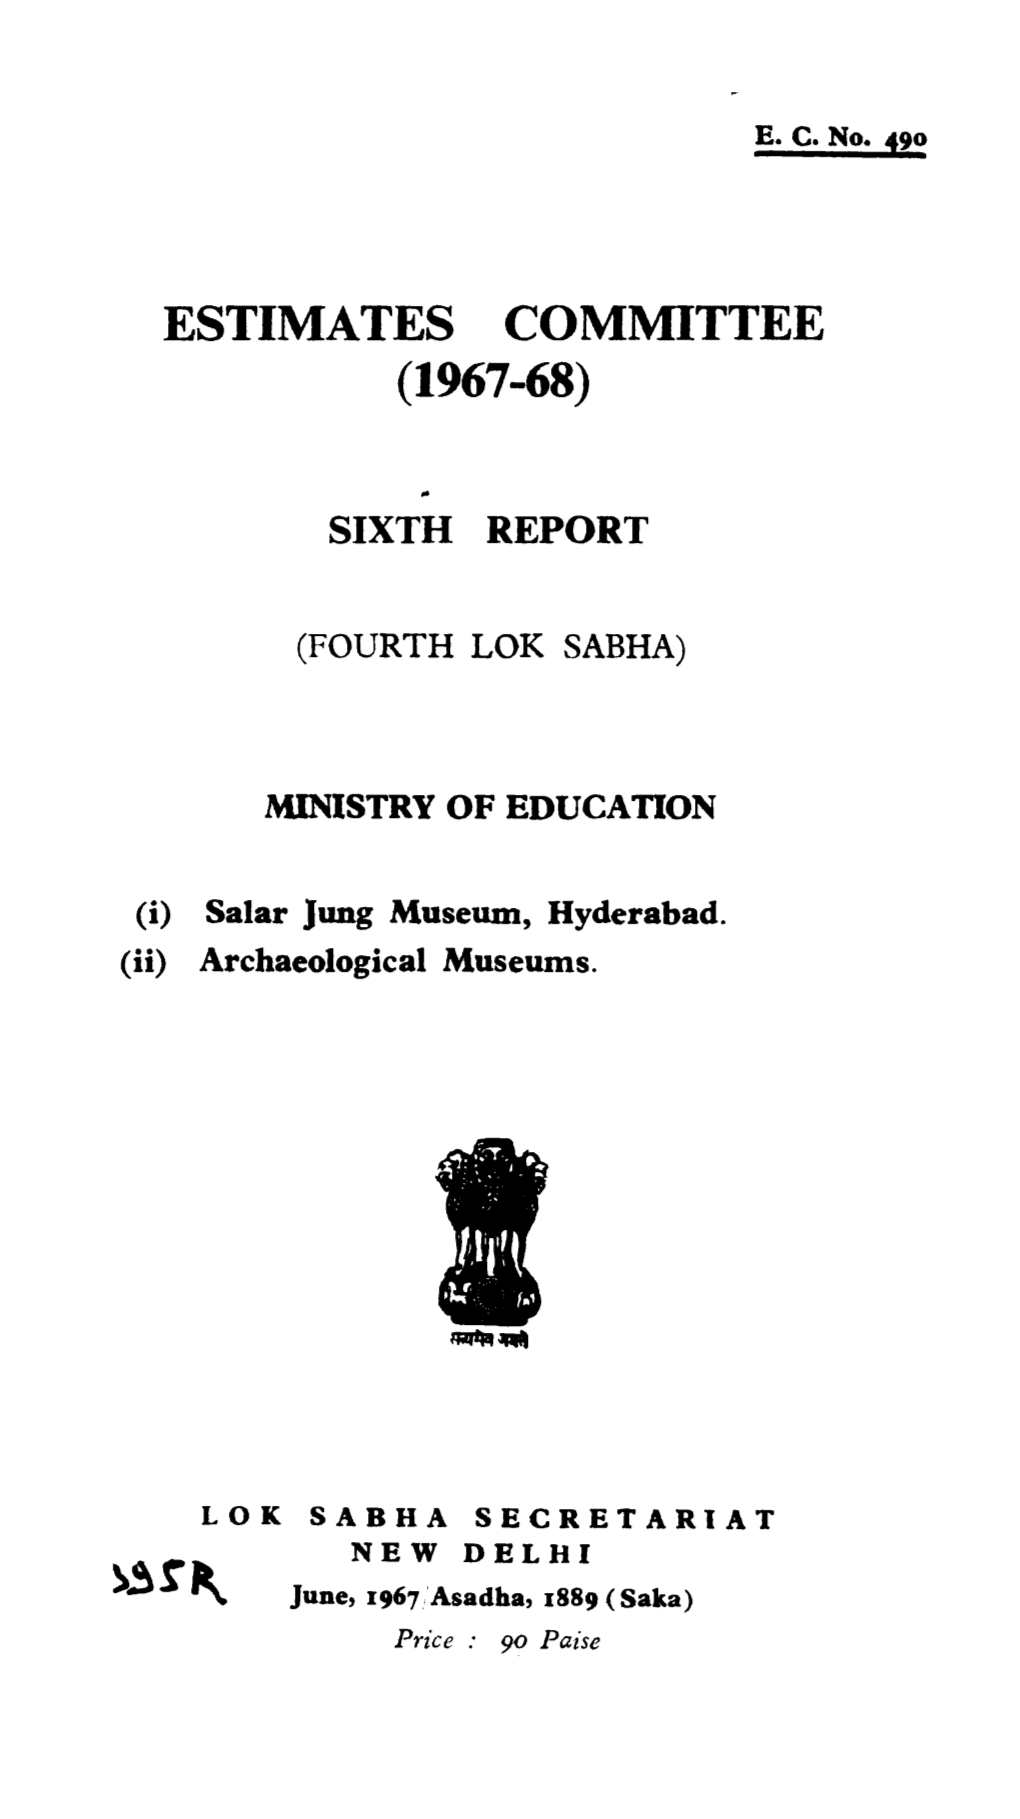 Estimates Committee (1967-68)